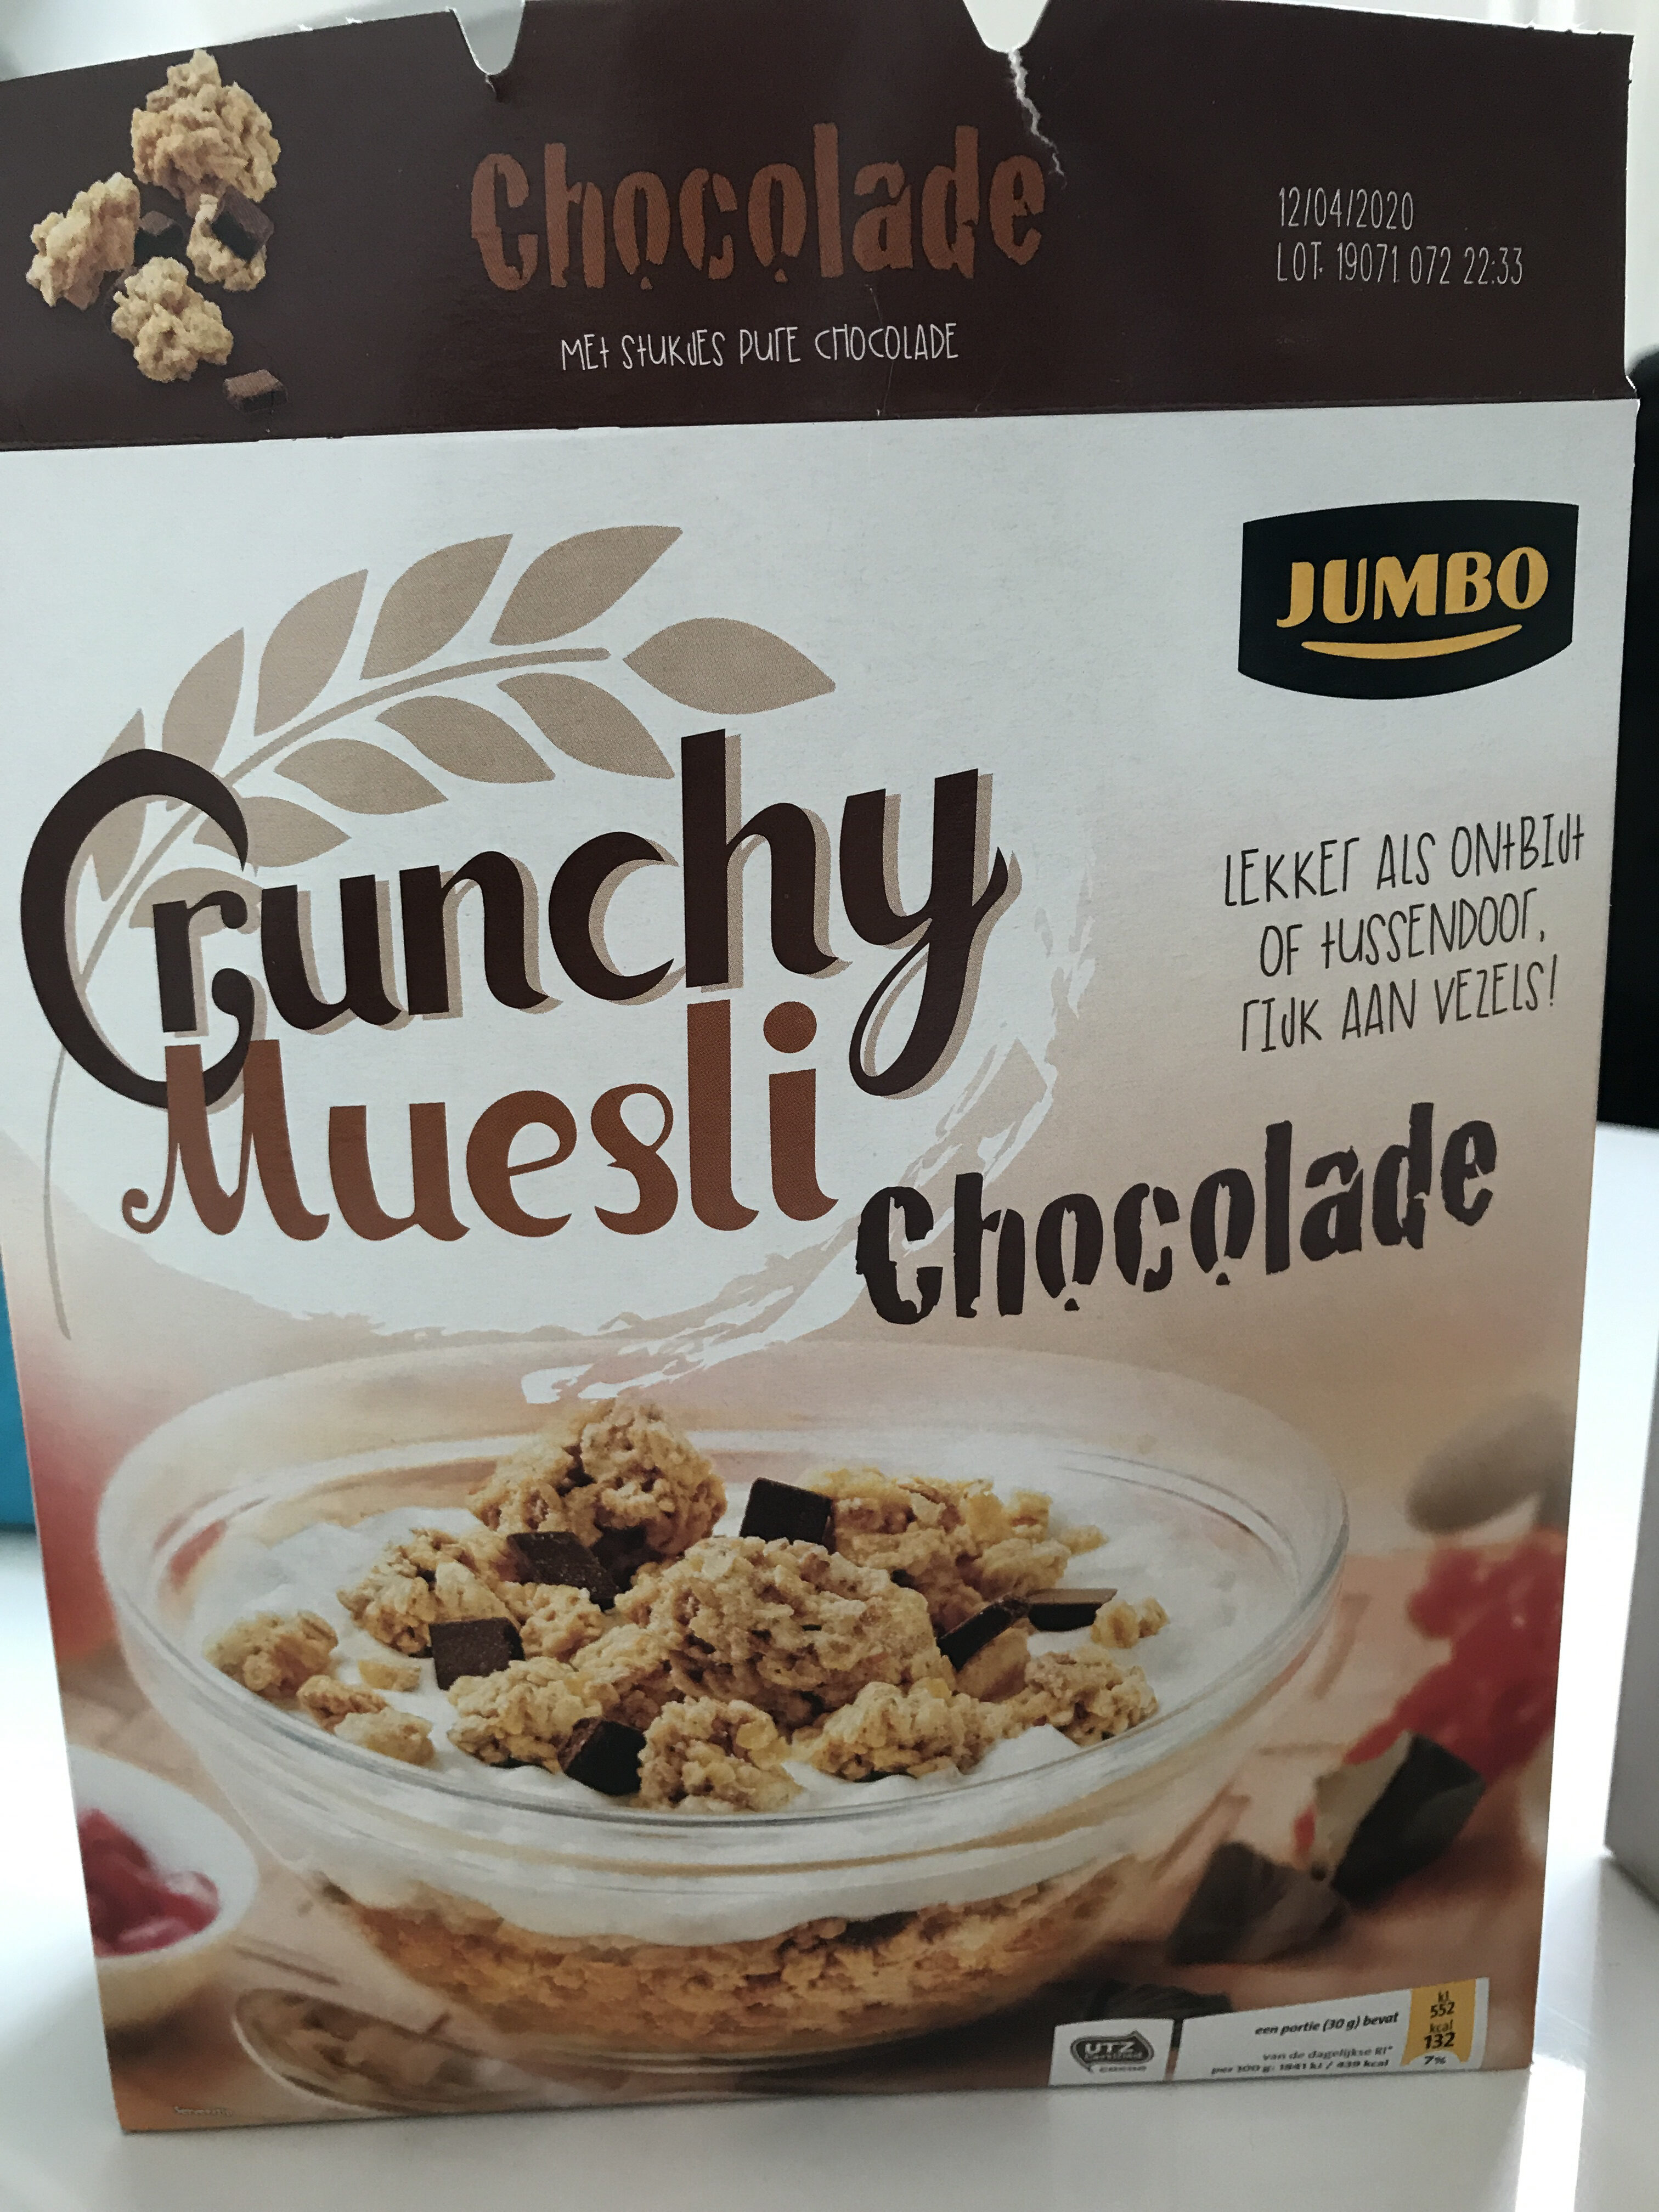 Crunchy Muesli chocolade - Product